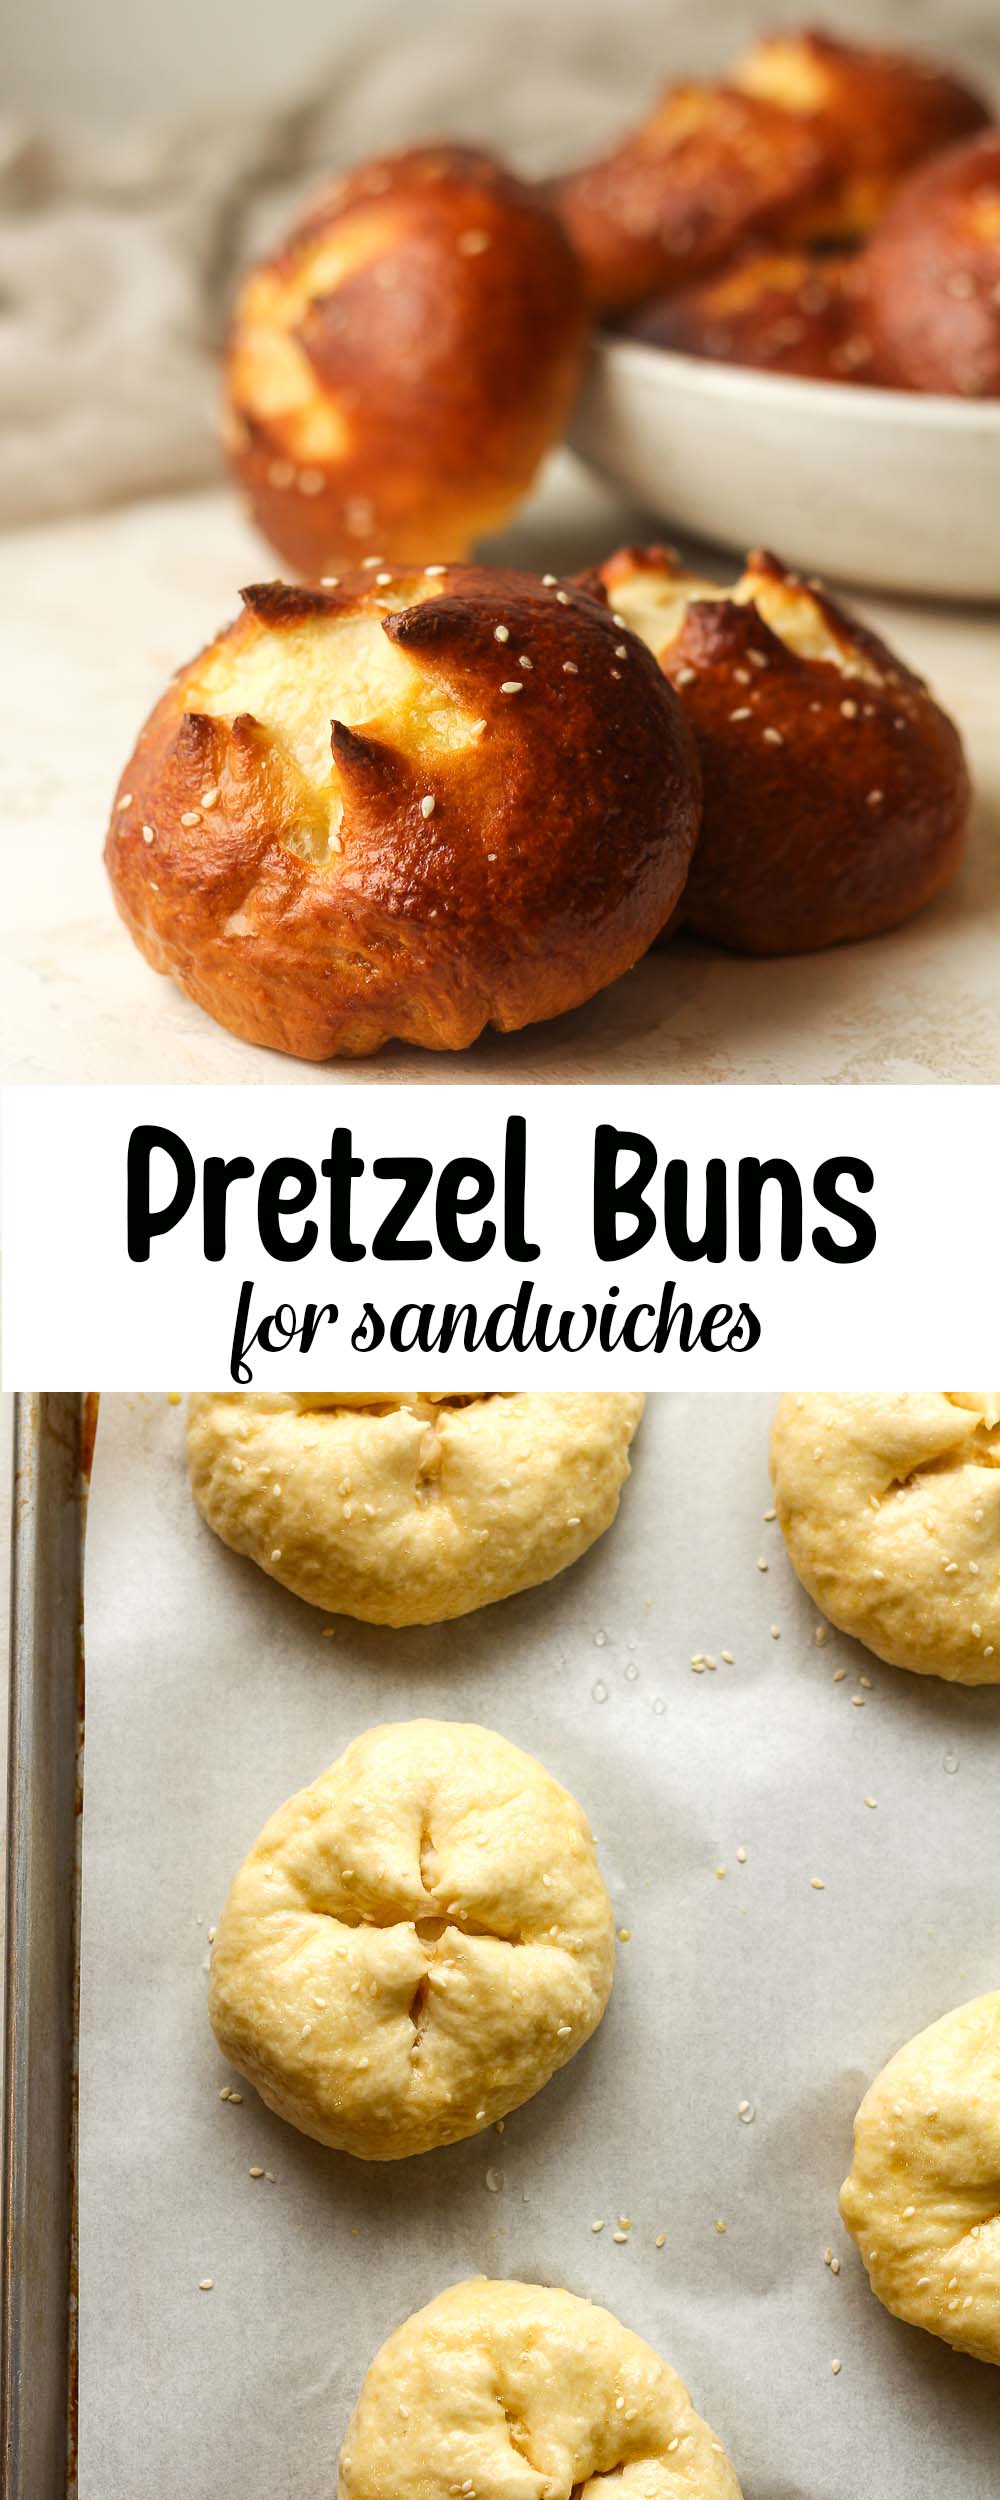 A collage of pretzel buns for sandwiches.